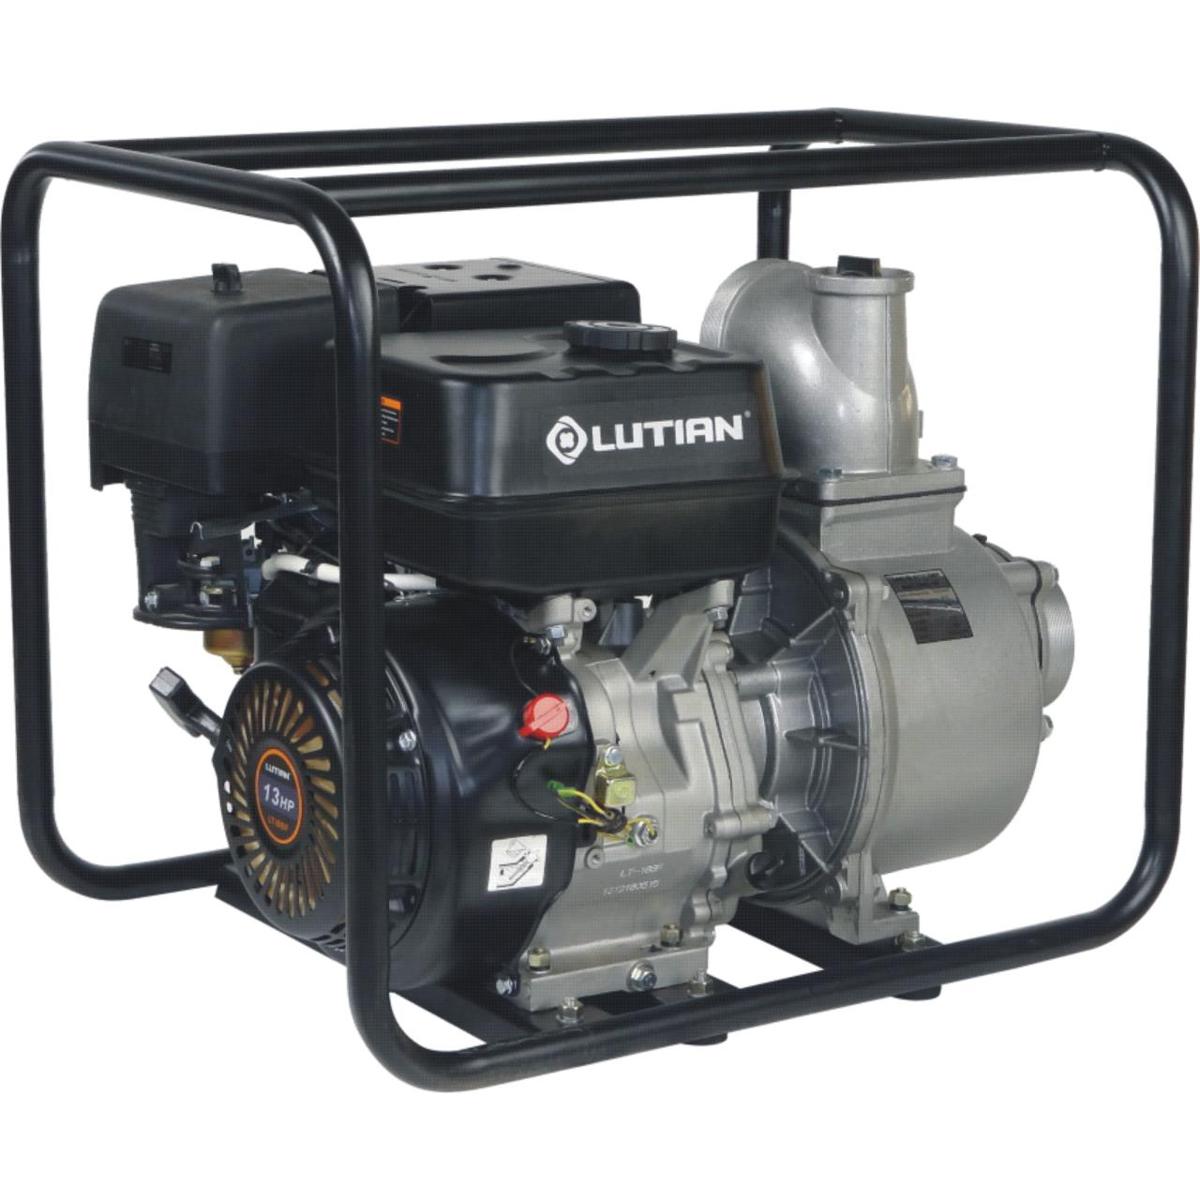 LUTIAN - LT30CX - Water Pump 3 inch (3x3) - Petrol Engine Driven - DeWatering Engine Pump Portable